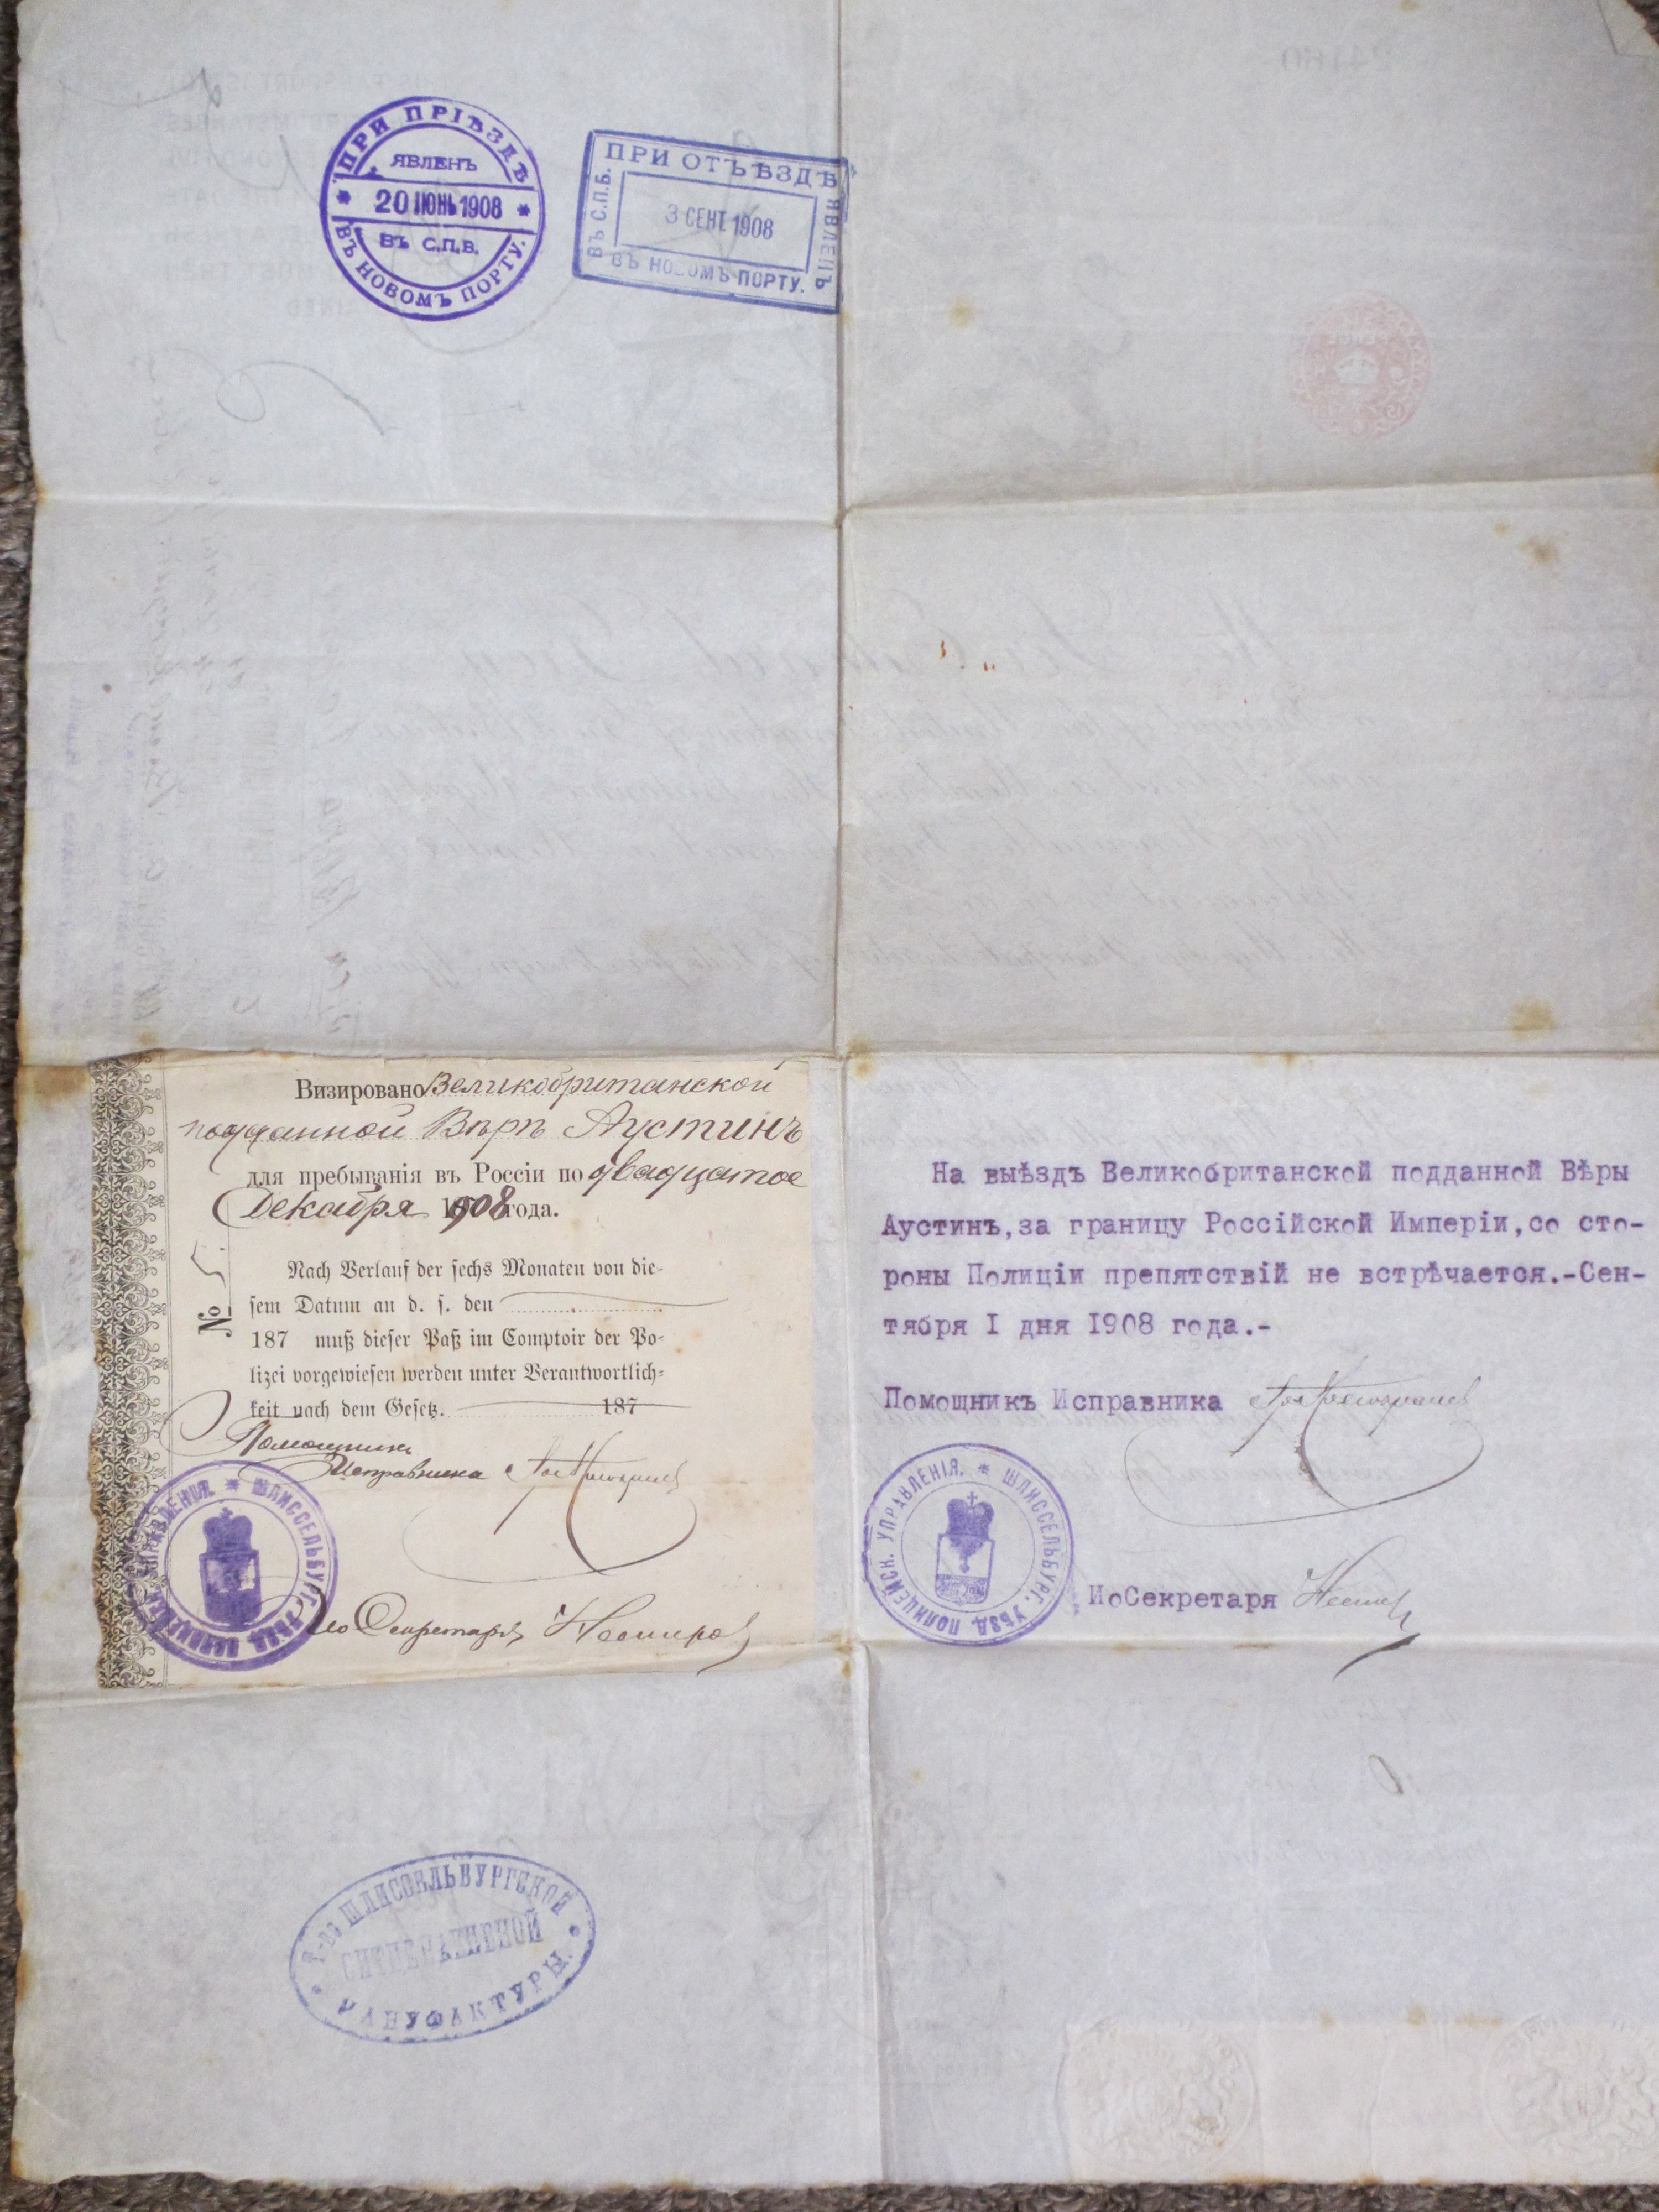 Vera Austin's Russian visa 1908